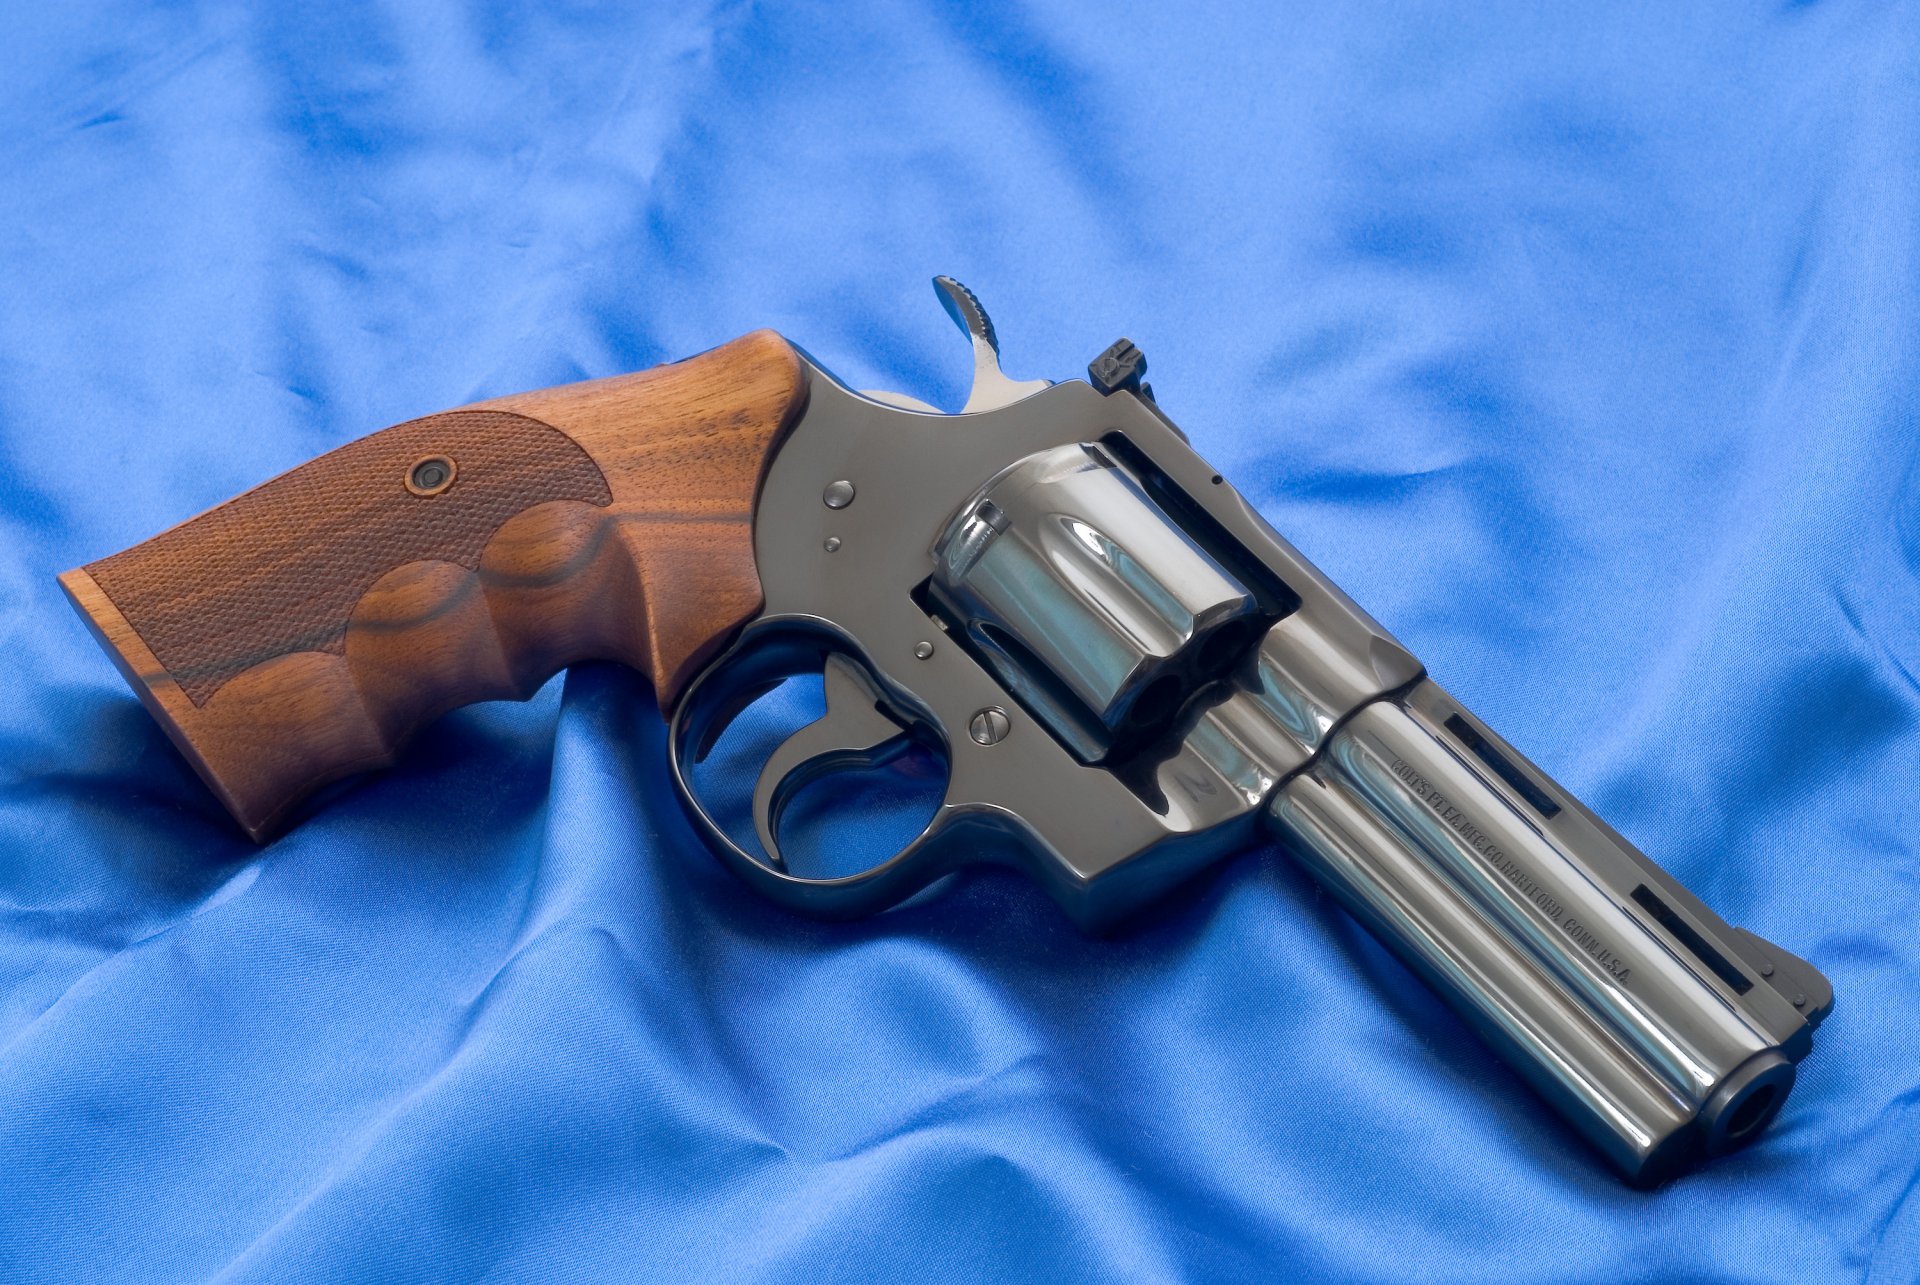 colt python gun 357 magnum revolver weapon firearms